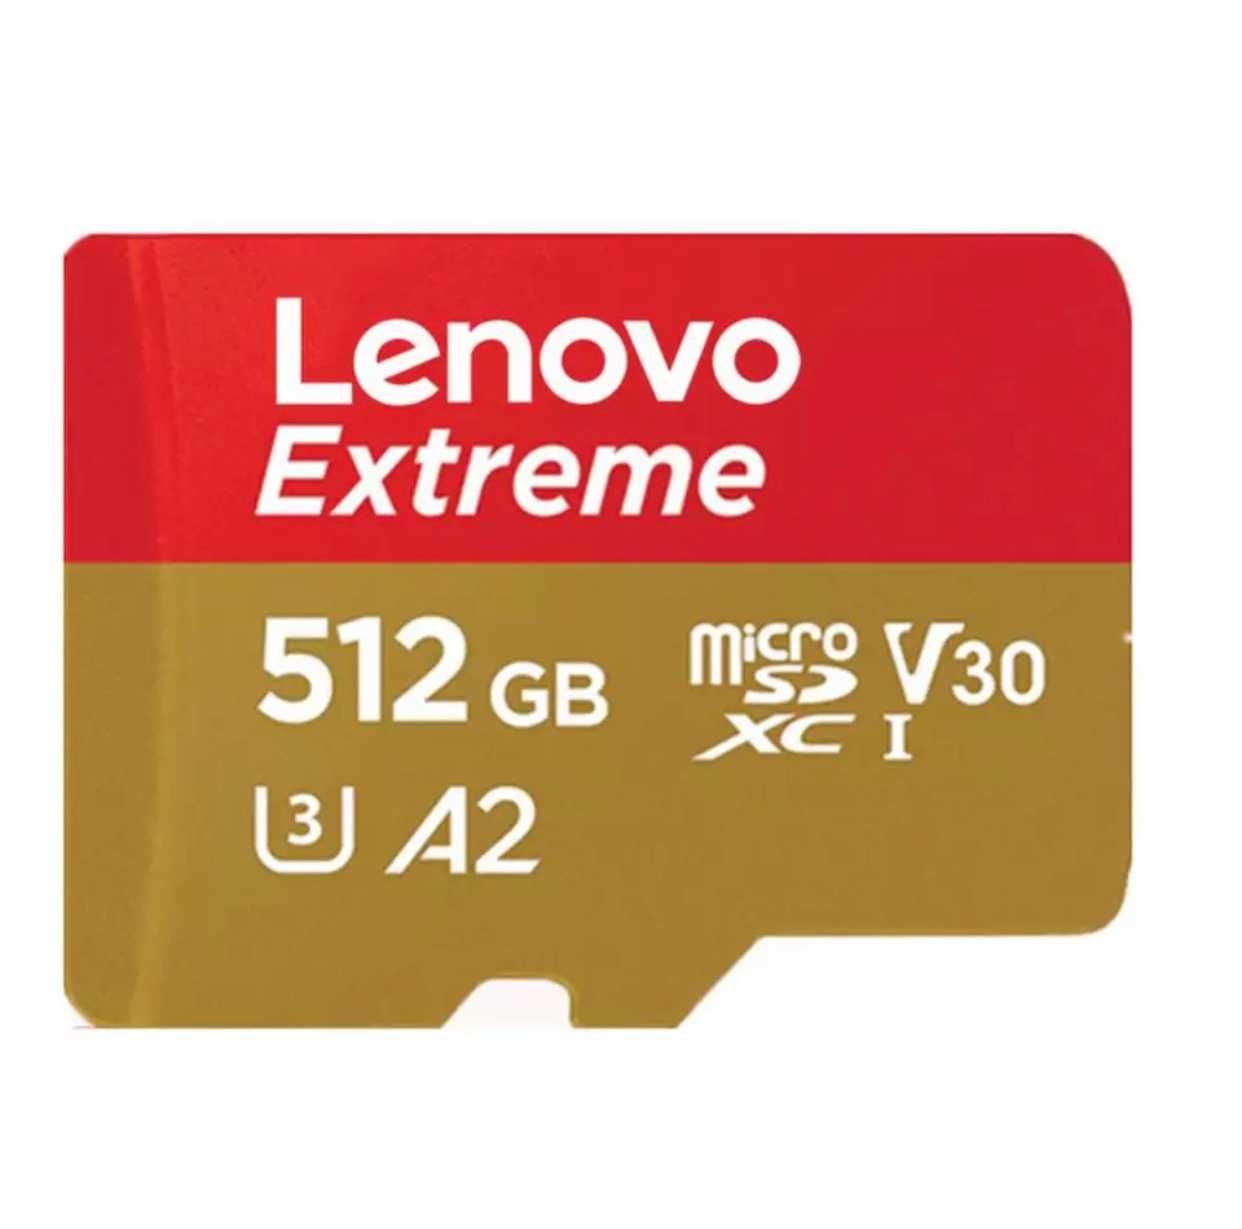 Lenovo Extreme Micro SD карта памяти 512 GB 1TB